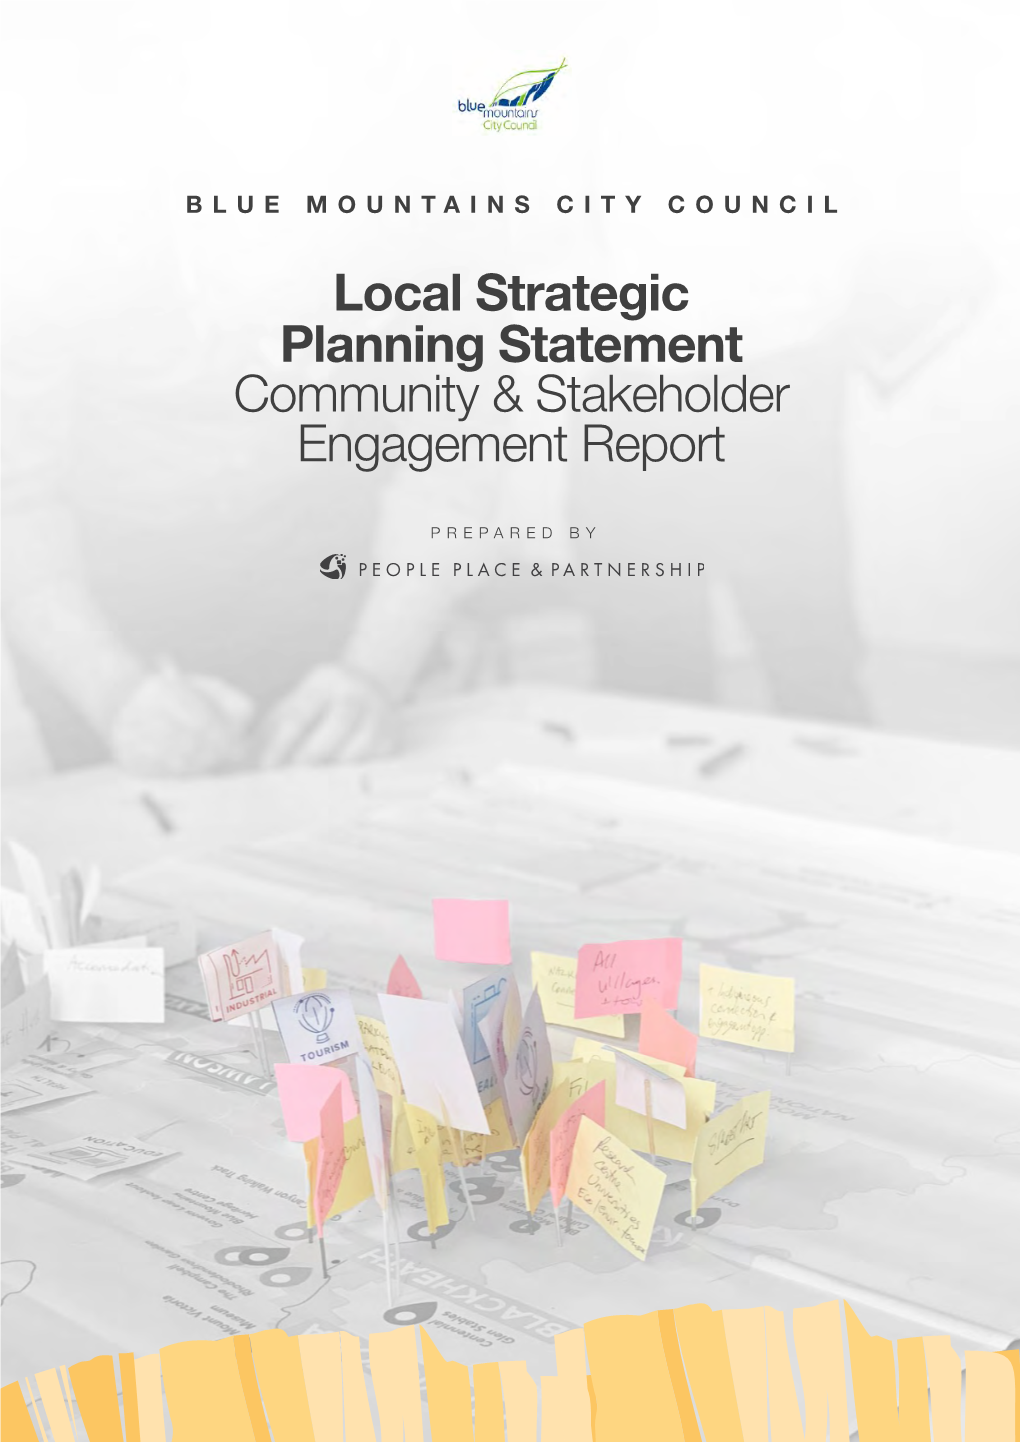 Local Strategic Planning Statement Community & Stakeholder